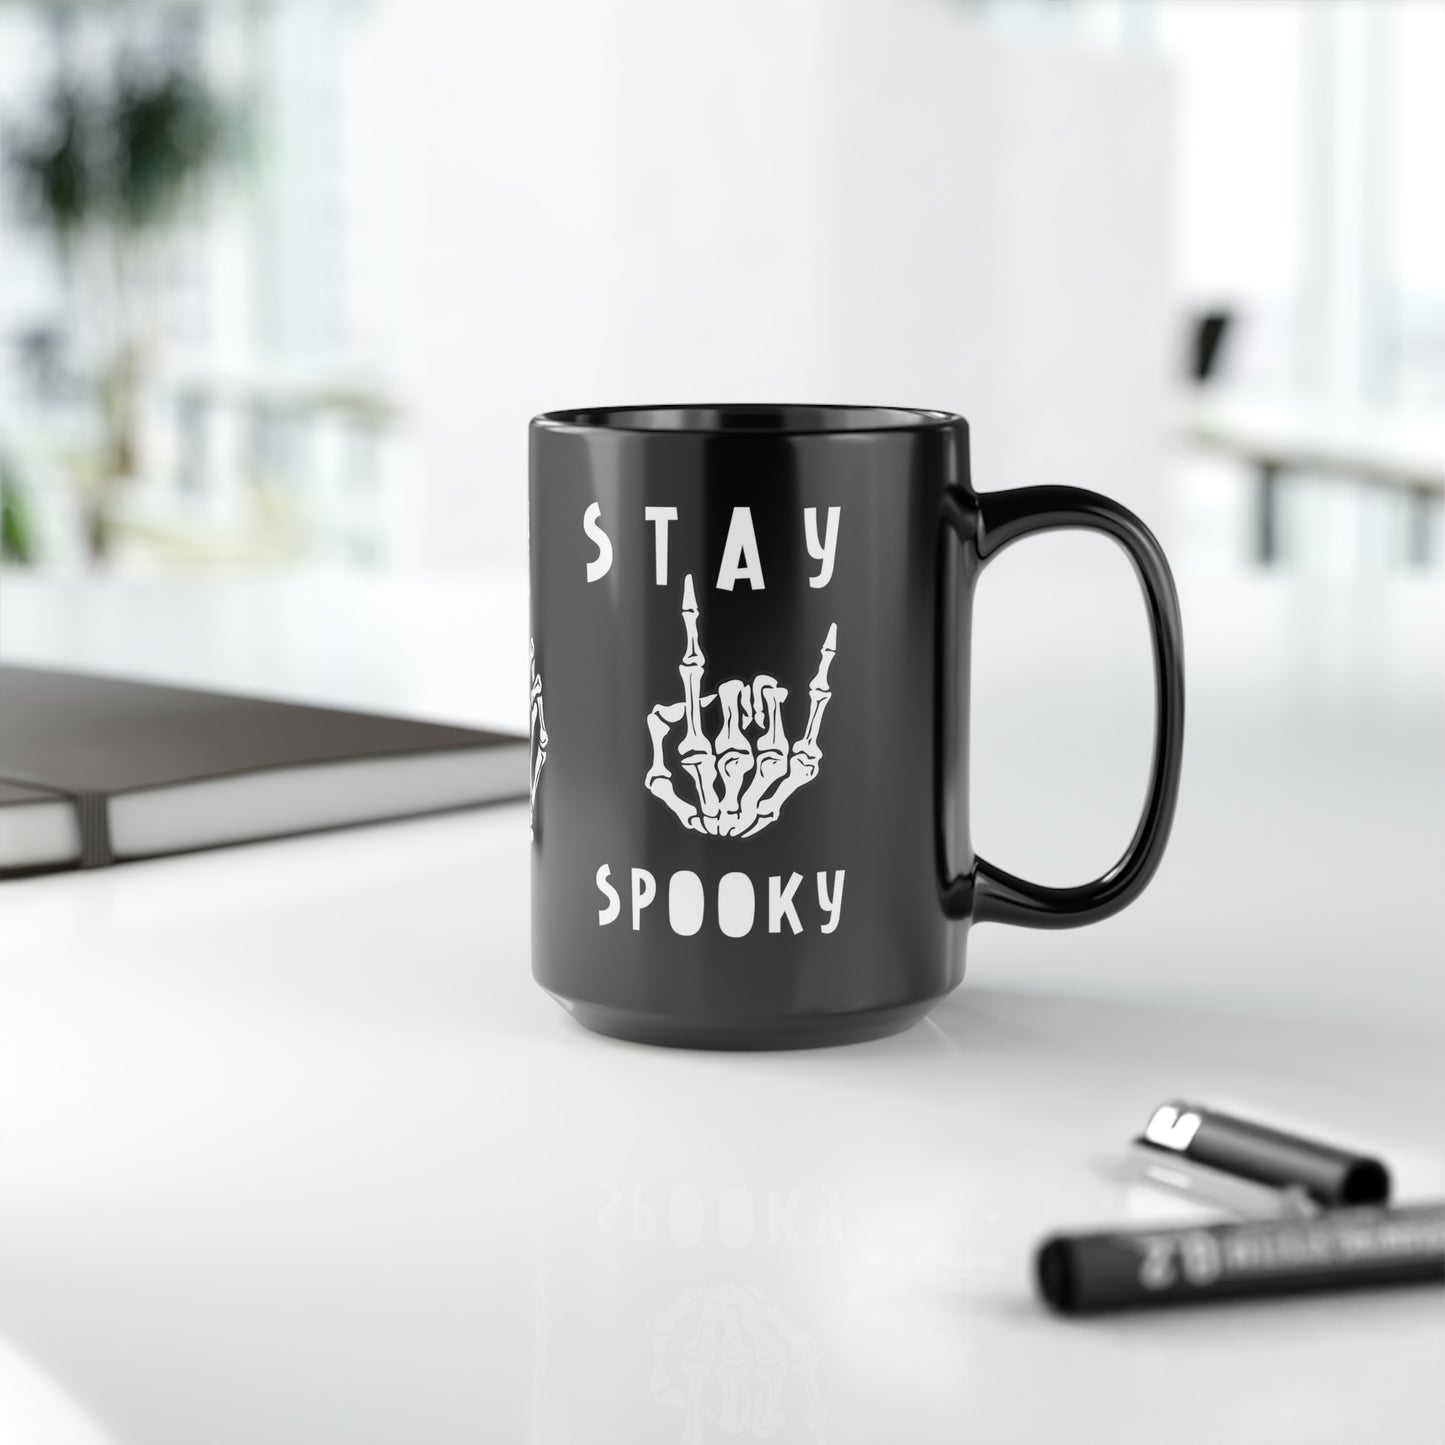 Stay Spooky - Coffee Mug